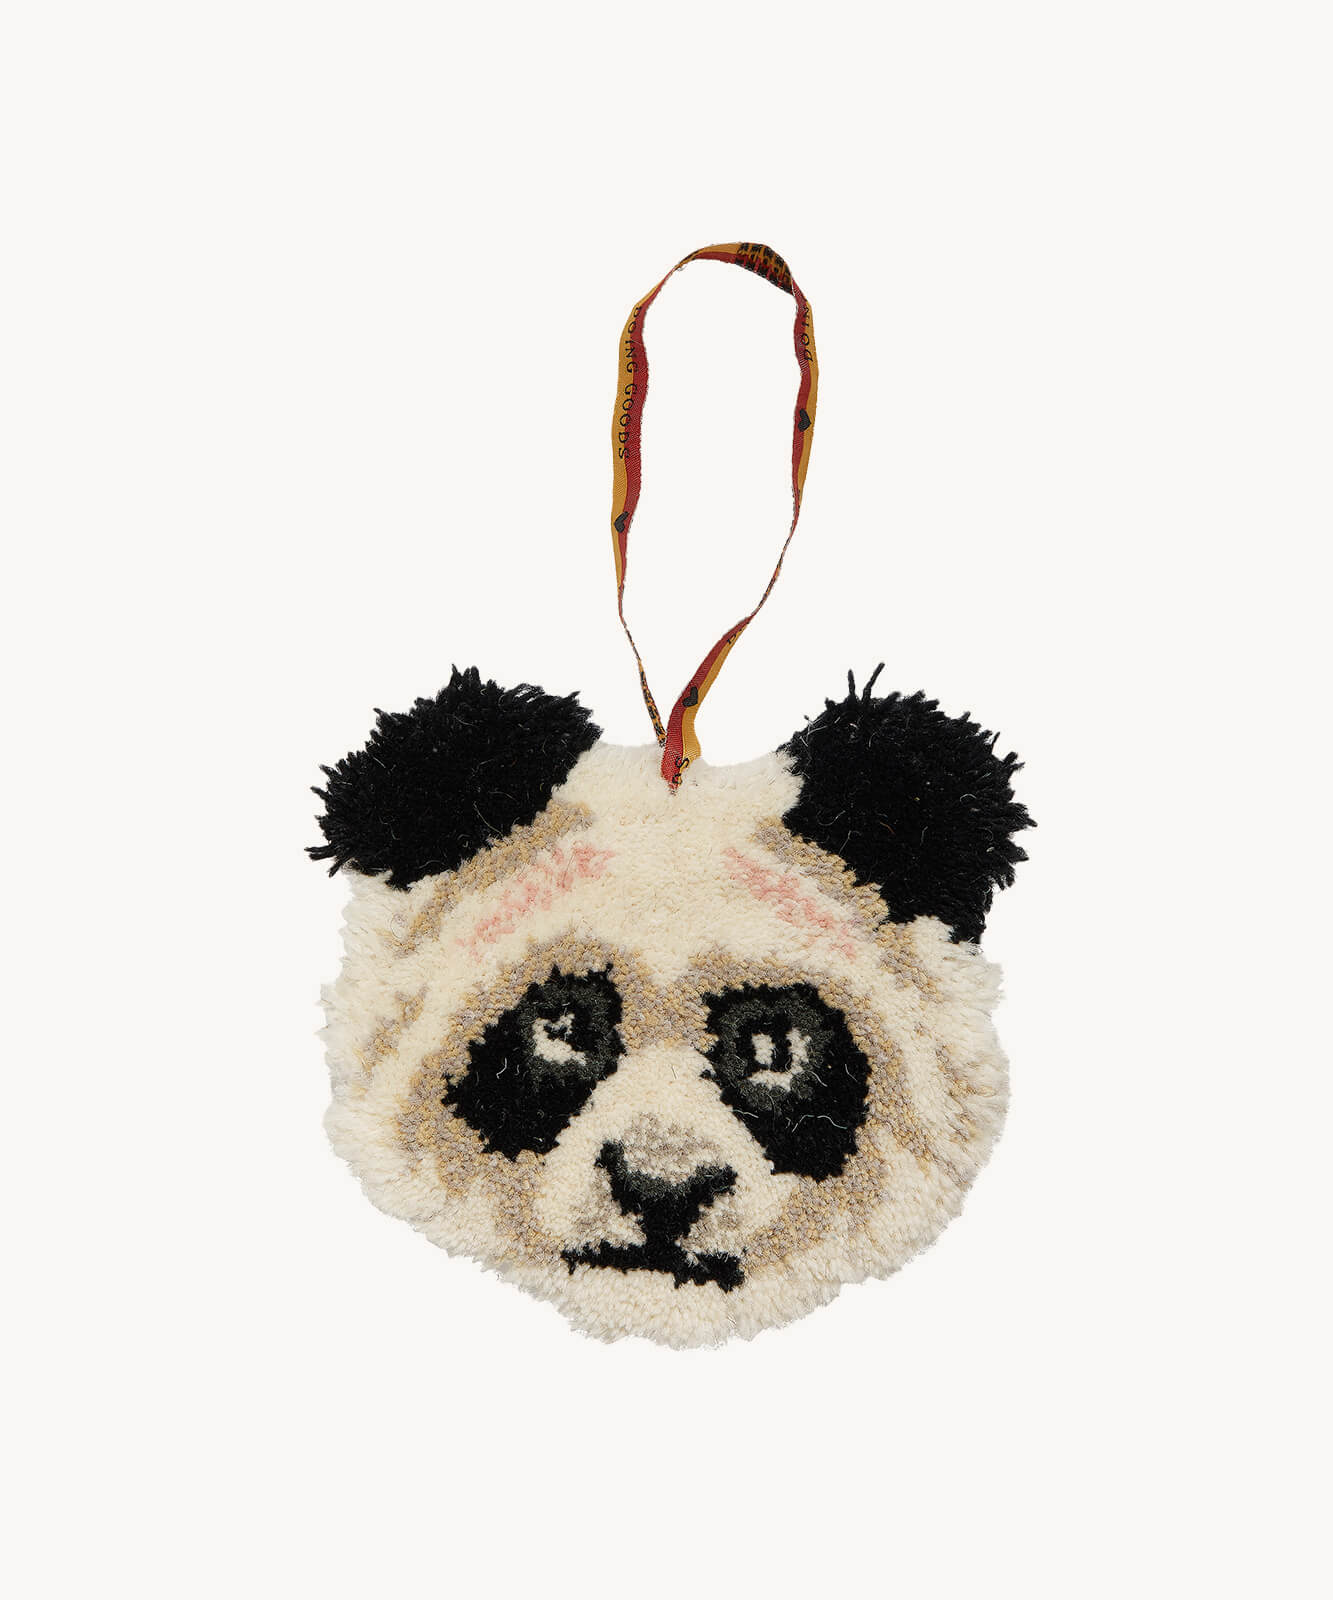 Doing Goods 2 Plumpy Panda Gift Hangers